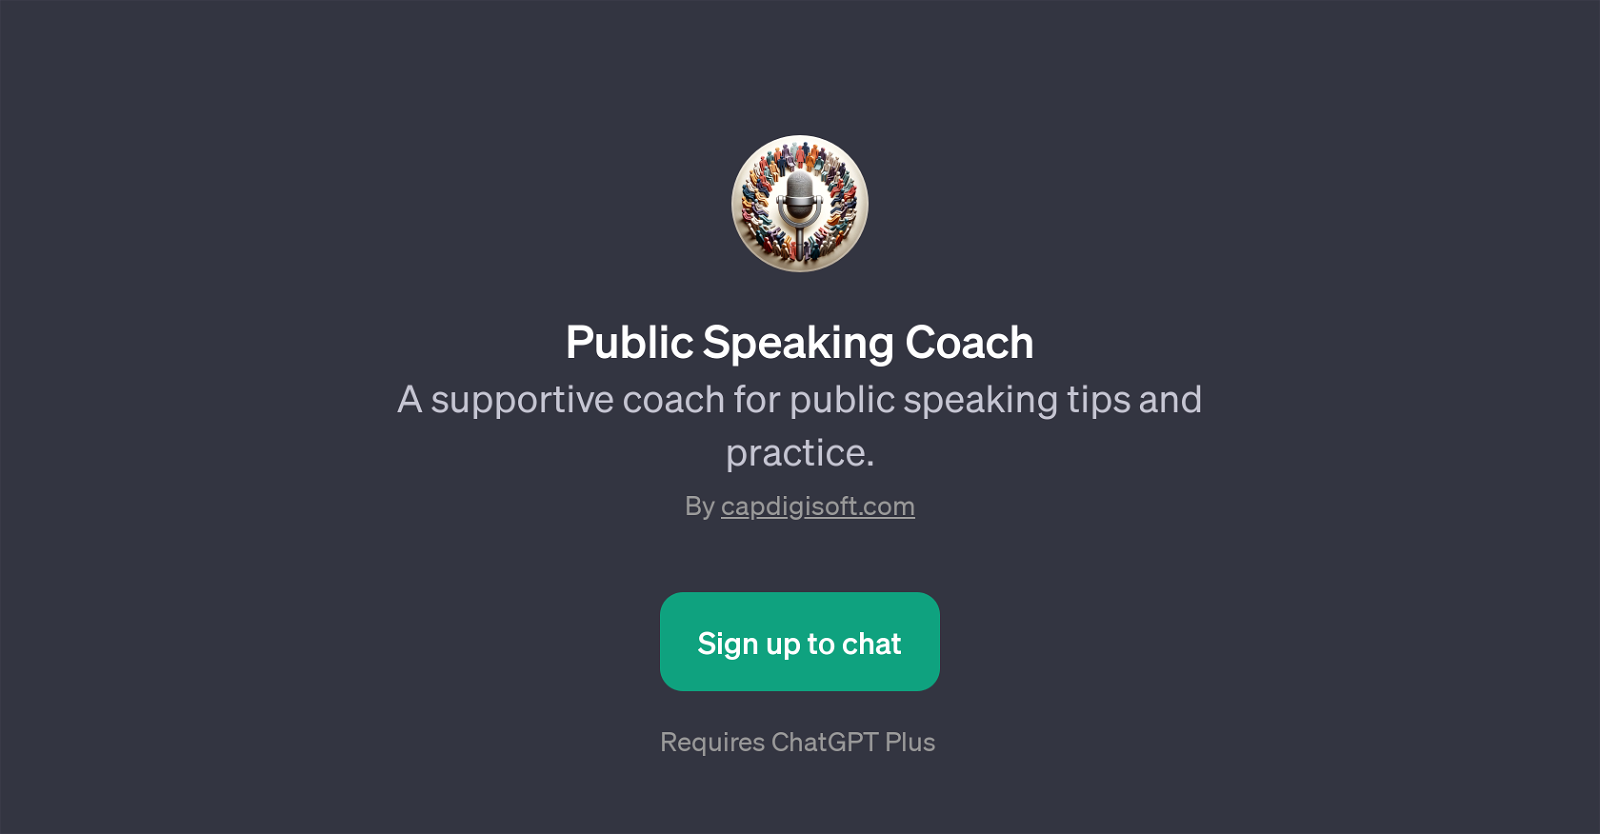 Public Speaking Coach website